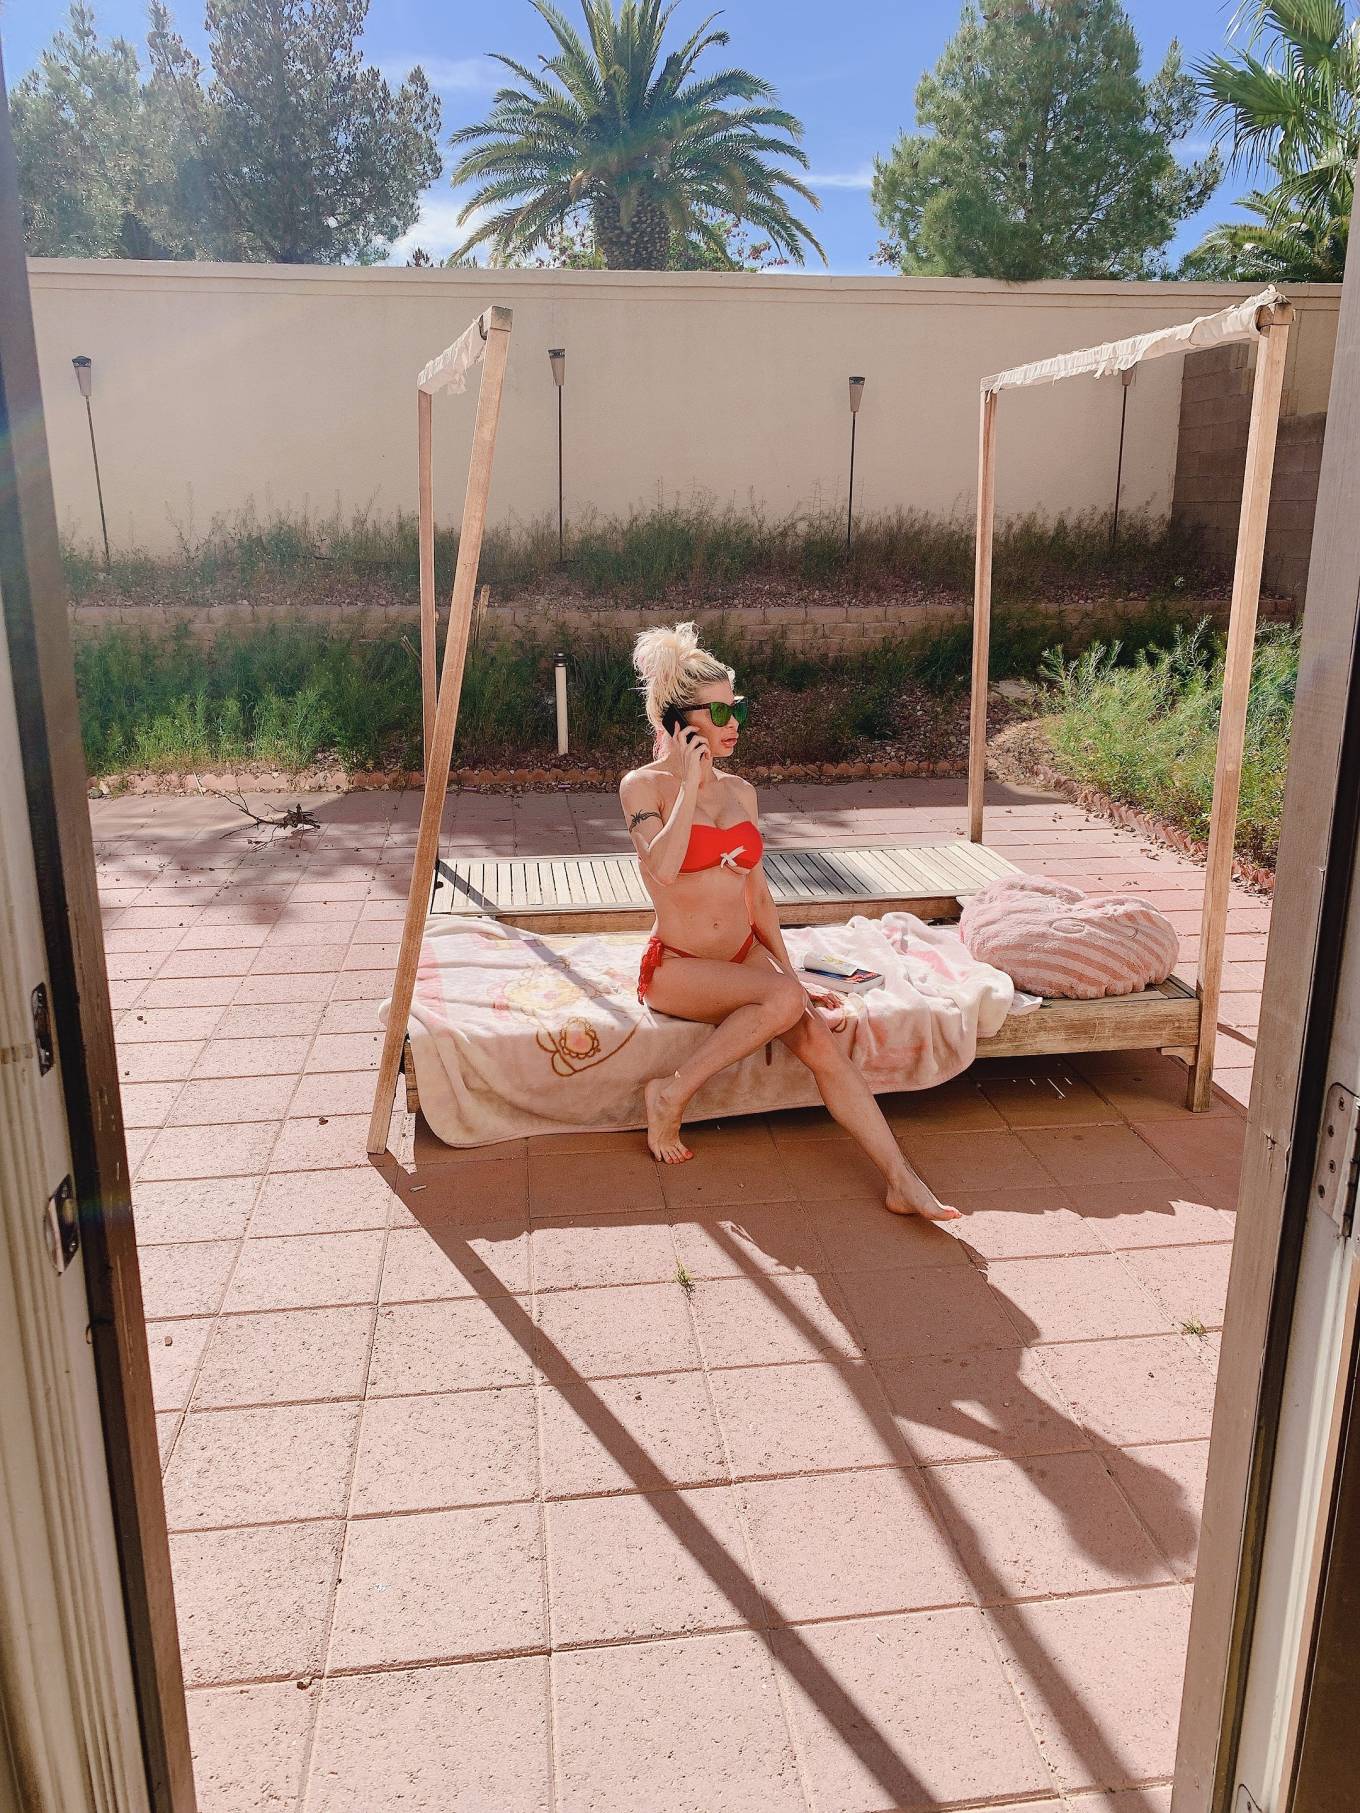 Frenchy Morgan â€“ Tanning in her garden in Las Vegas